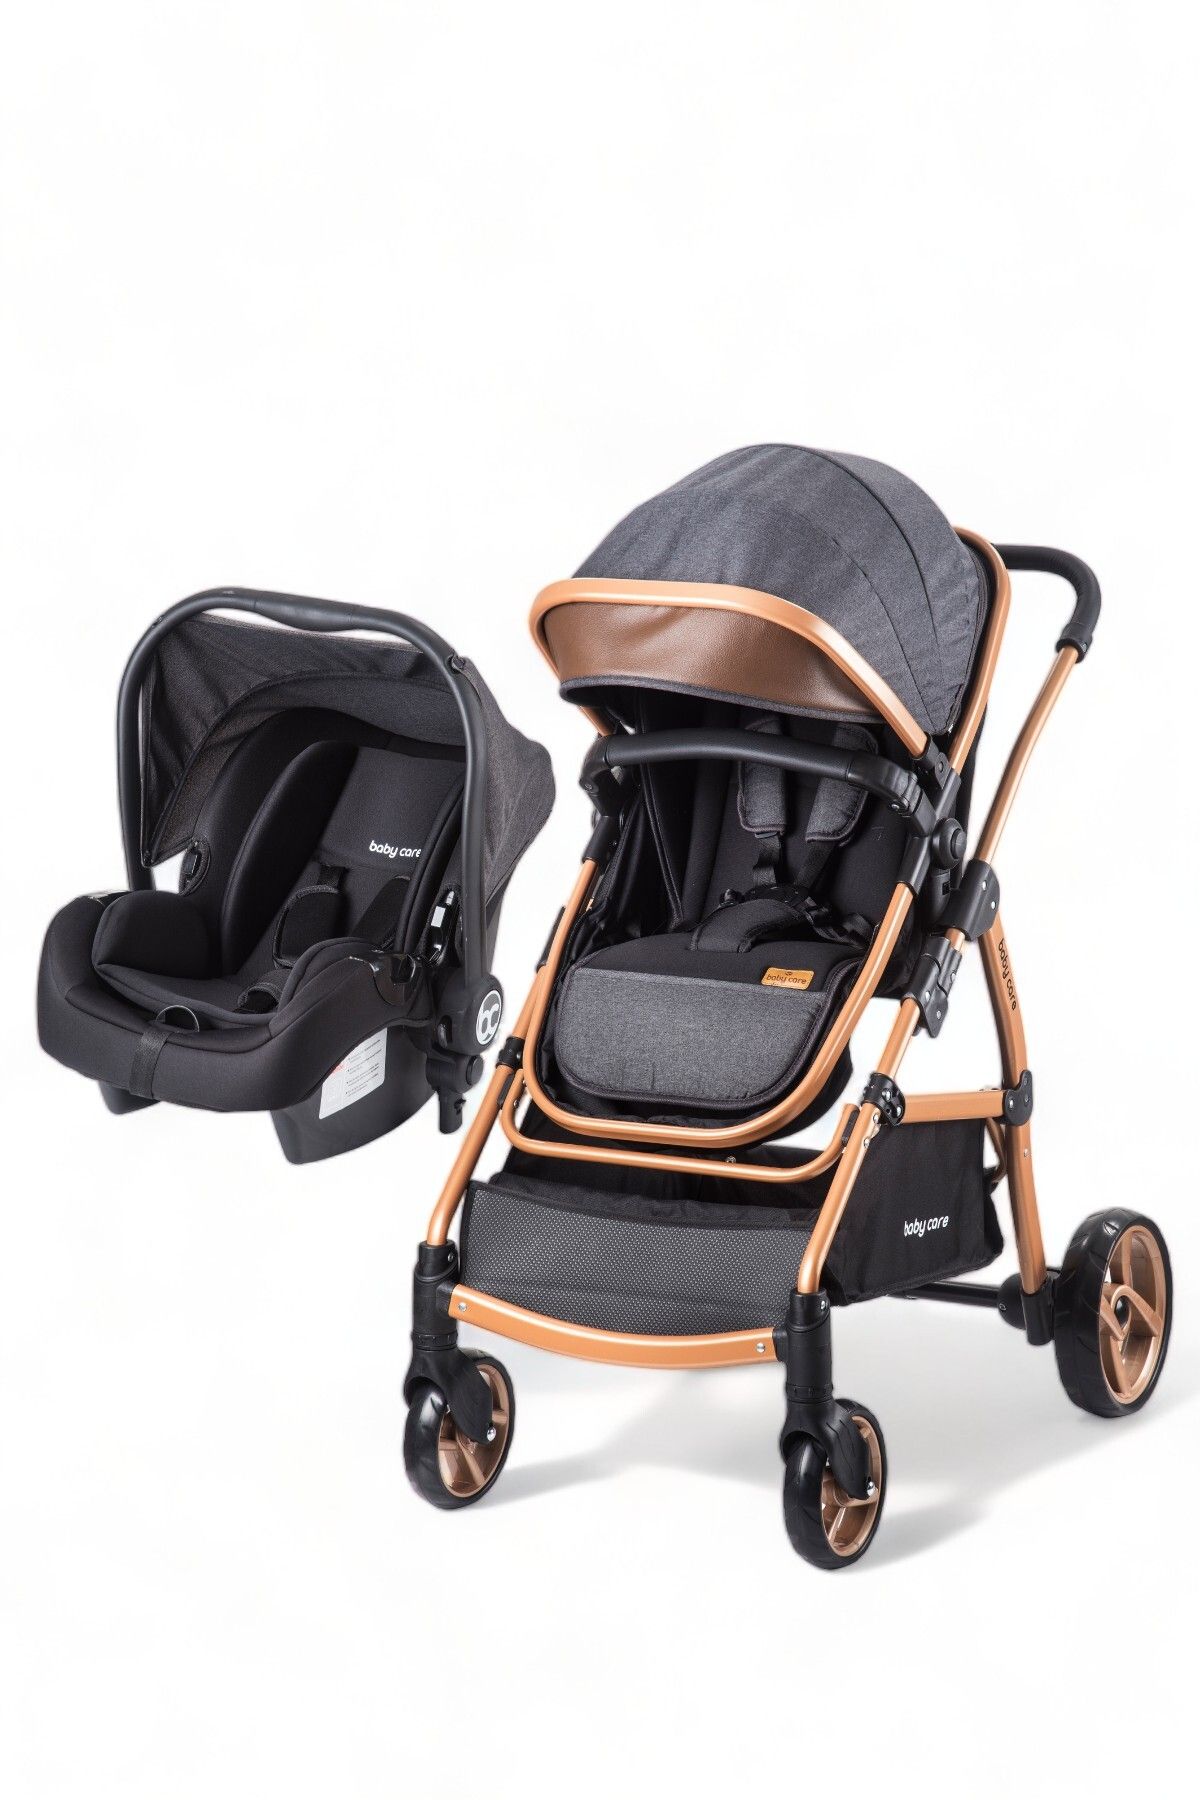 Baby Care Bc 315 - Safari Pro Travel Sistem Bebek Arabası ( Gold-siyah)